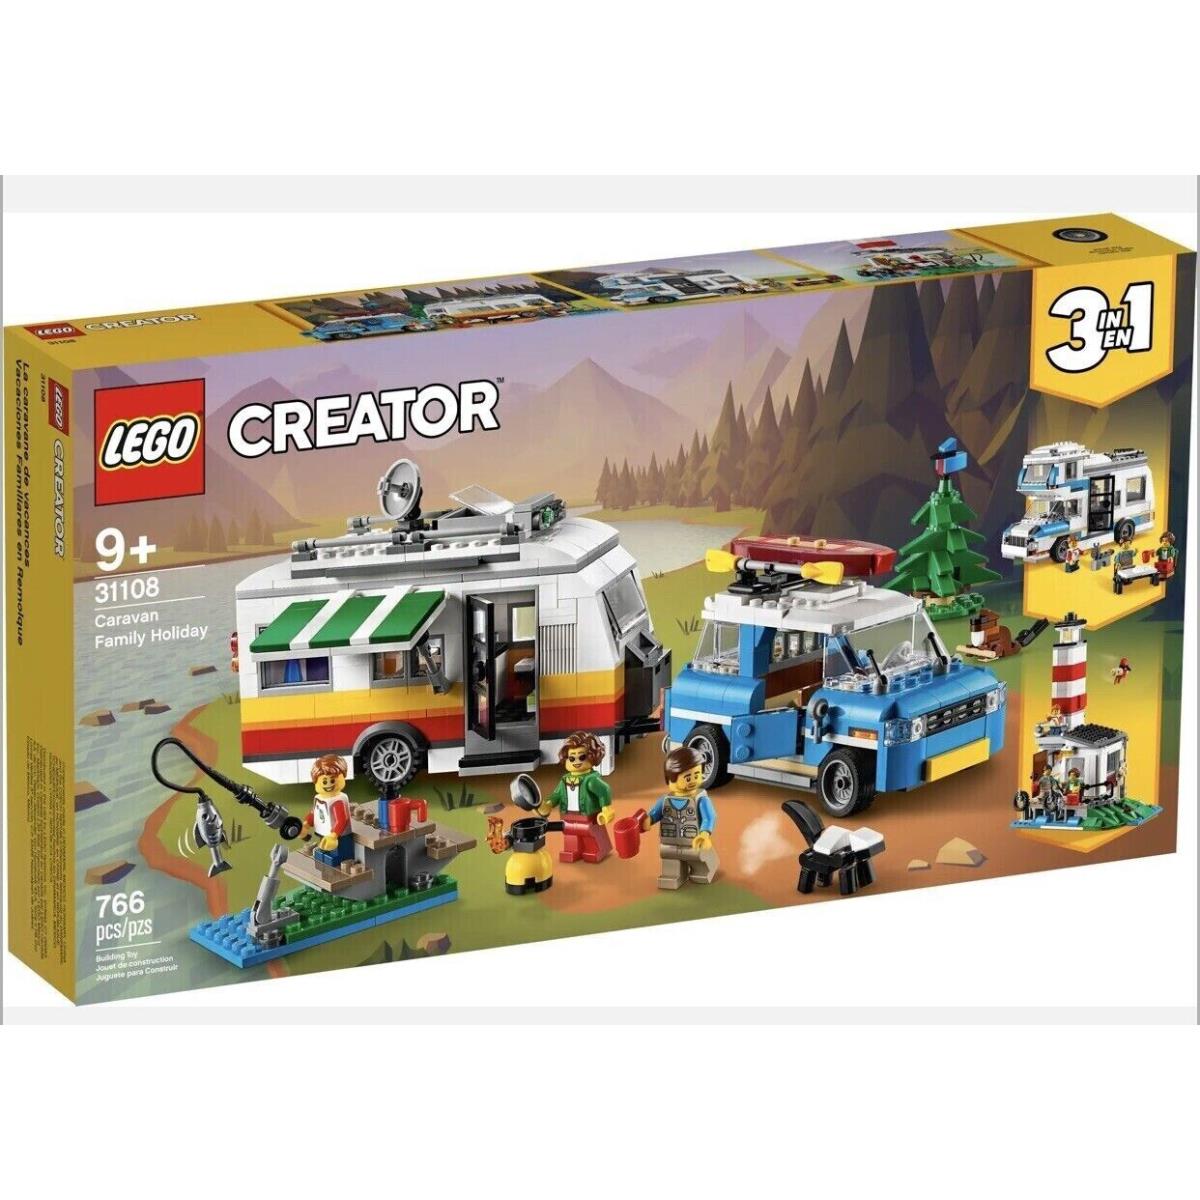 Lego Creator 3 In 1 Caravan Family Holiday Set 31108